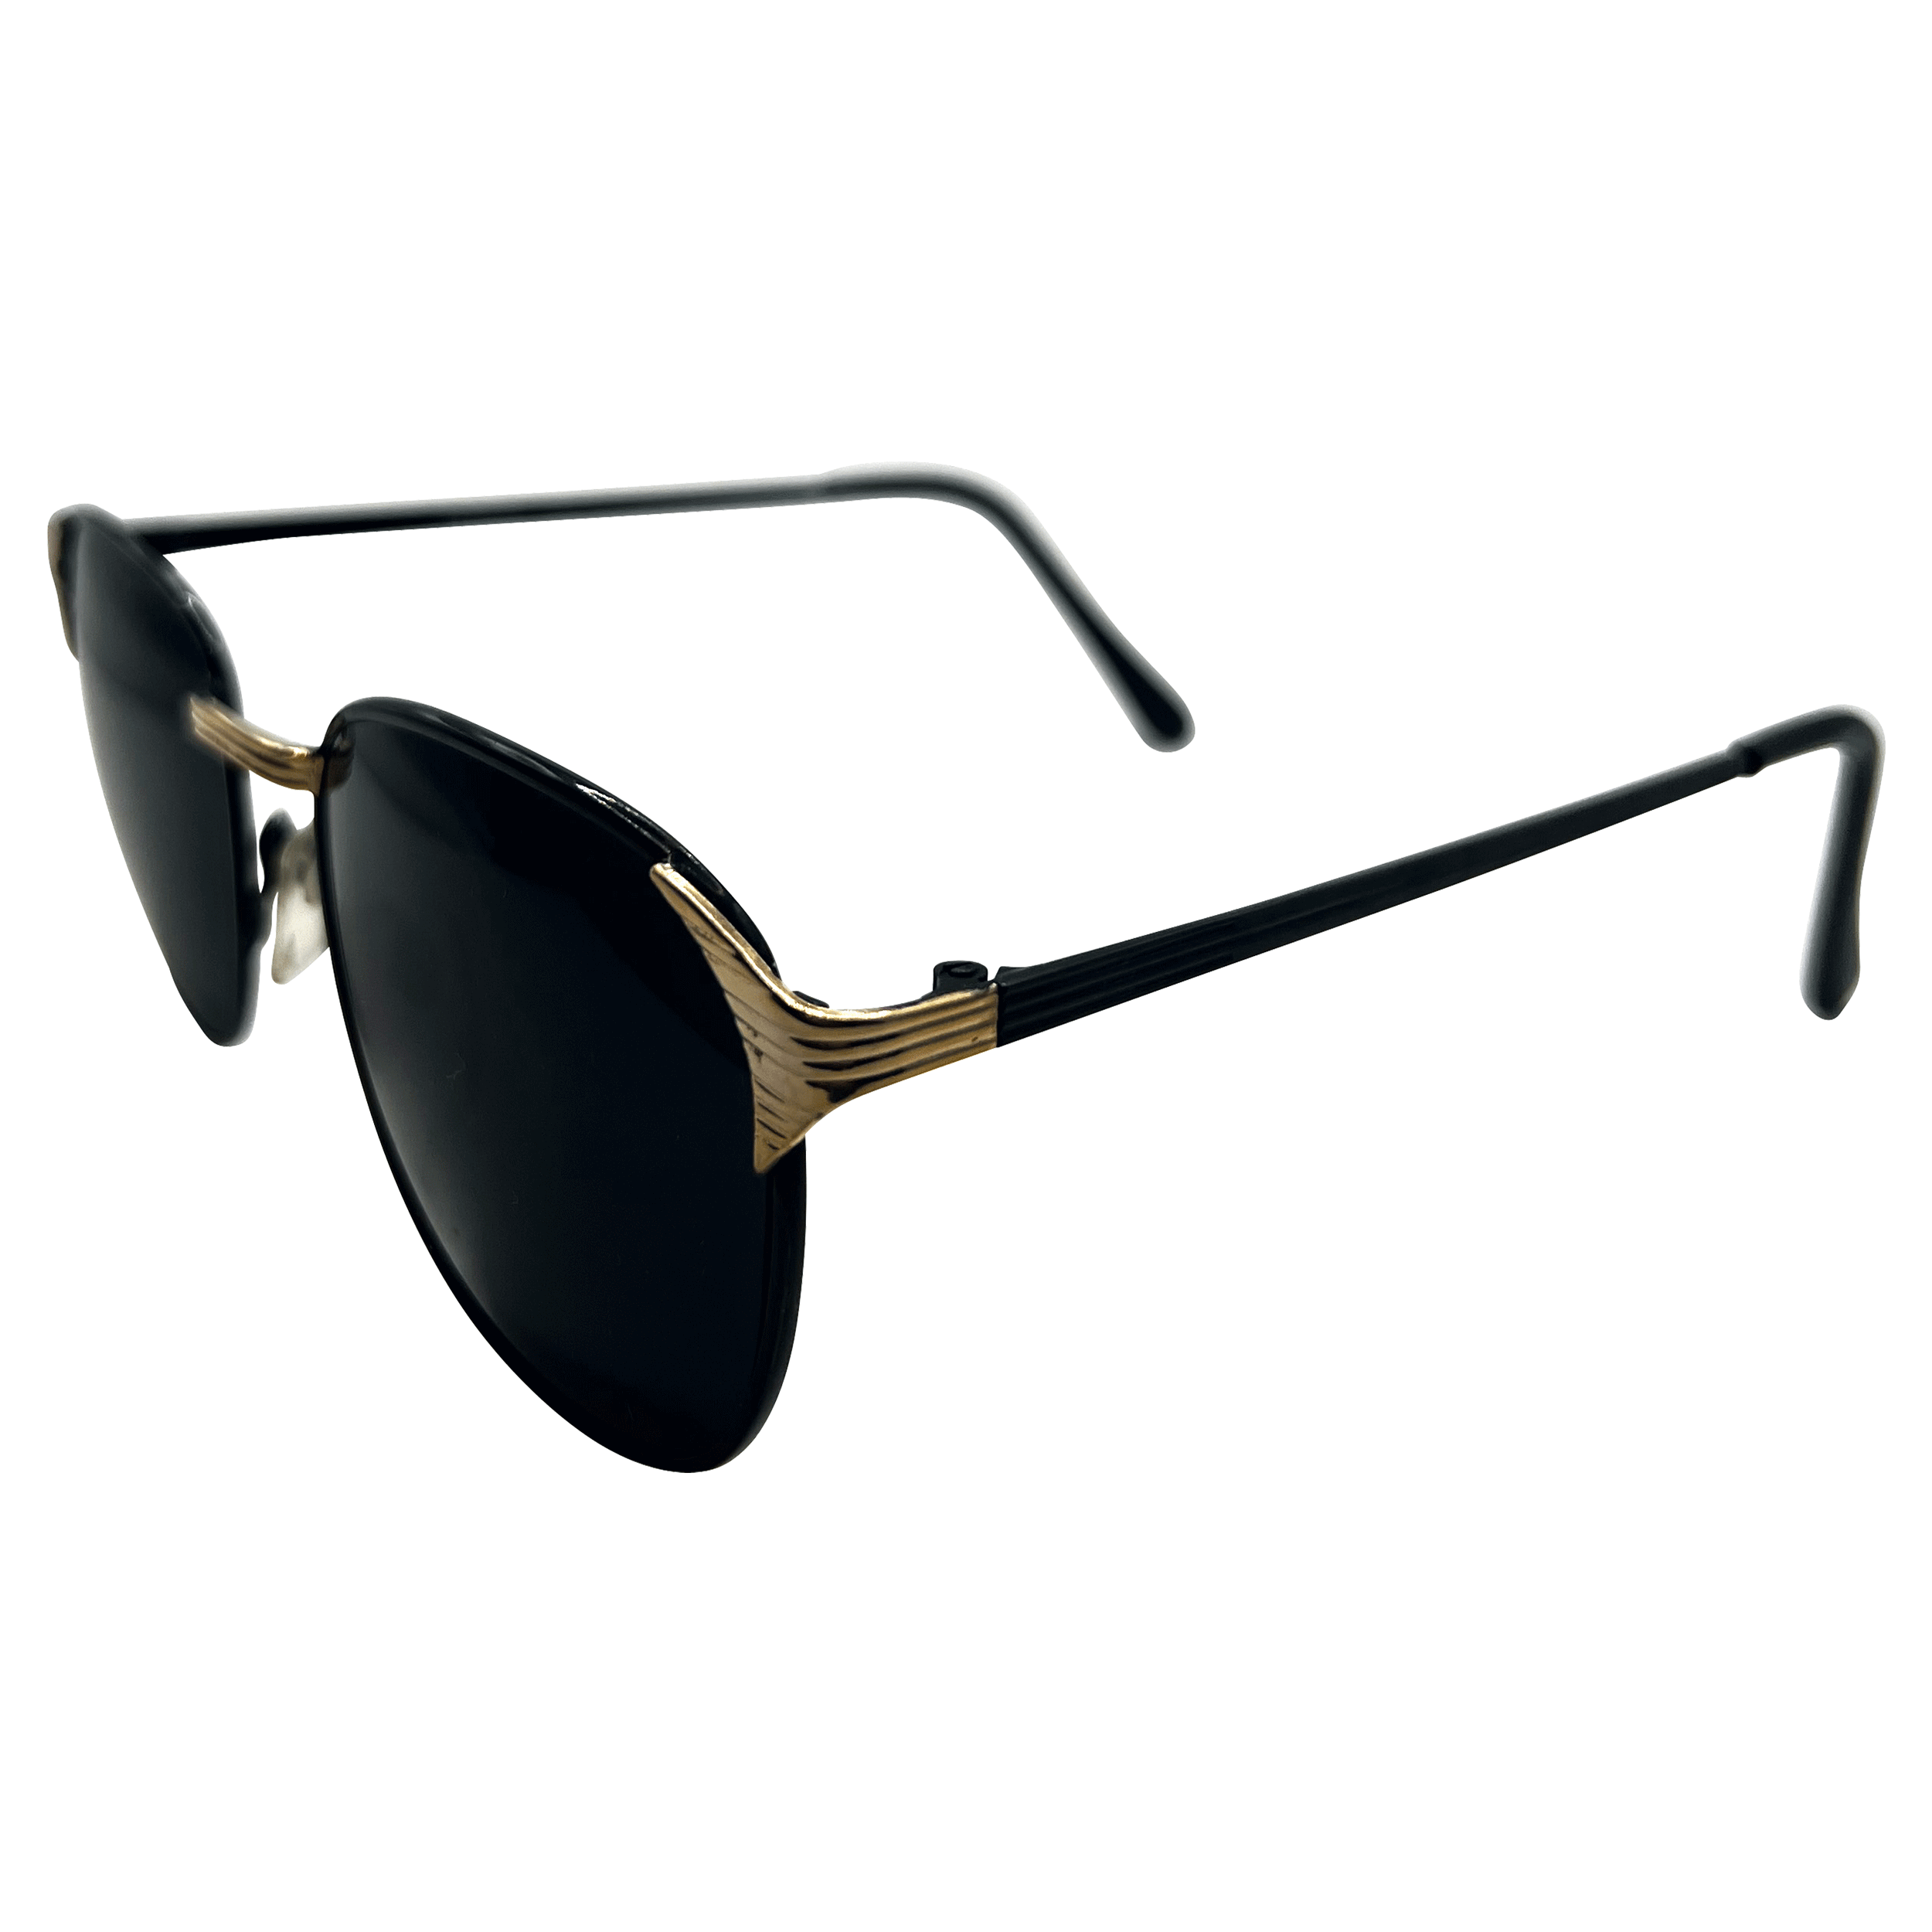 KIKO Gold / Super Dark Classic Sunglasses